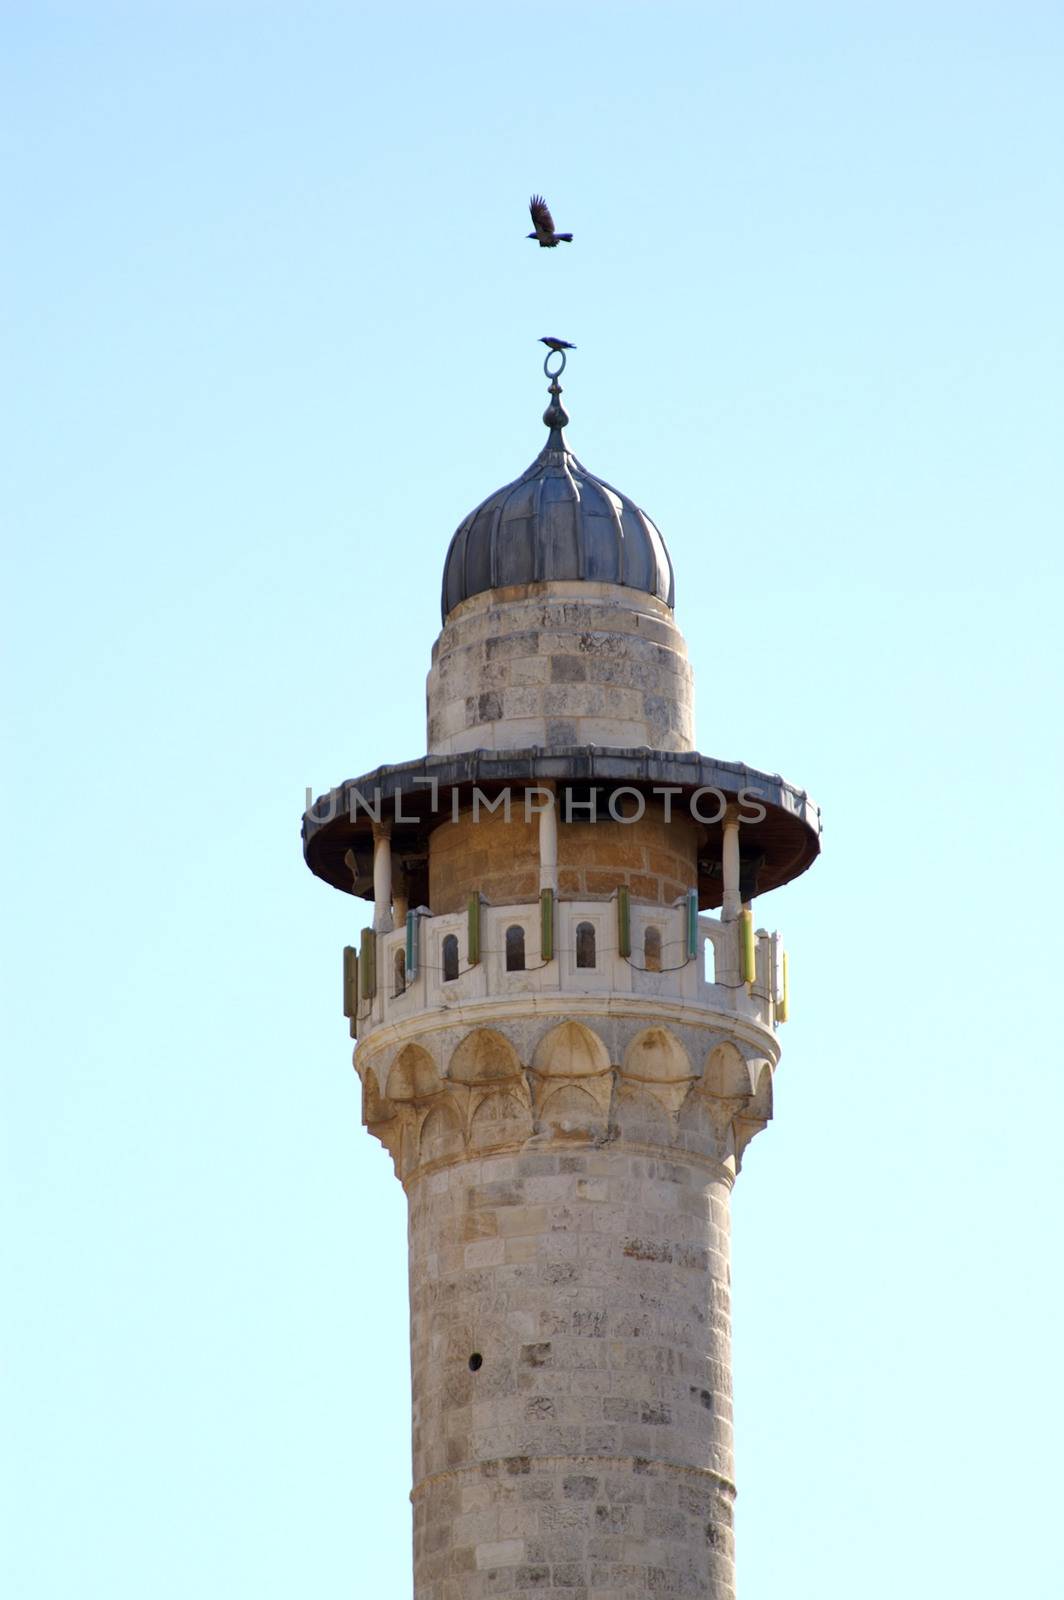 raven over a minaret by javax